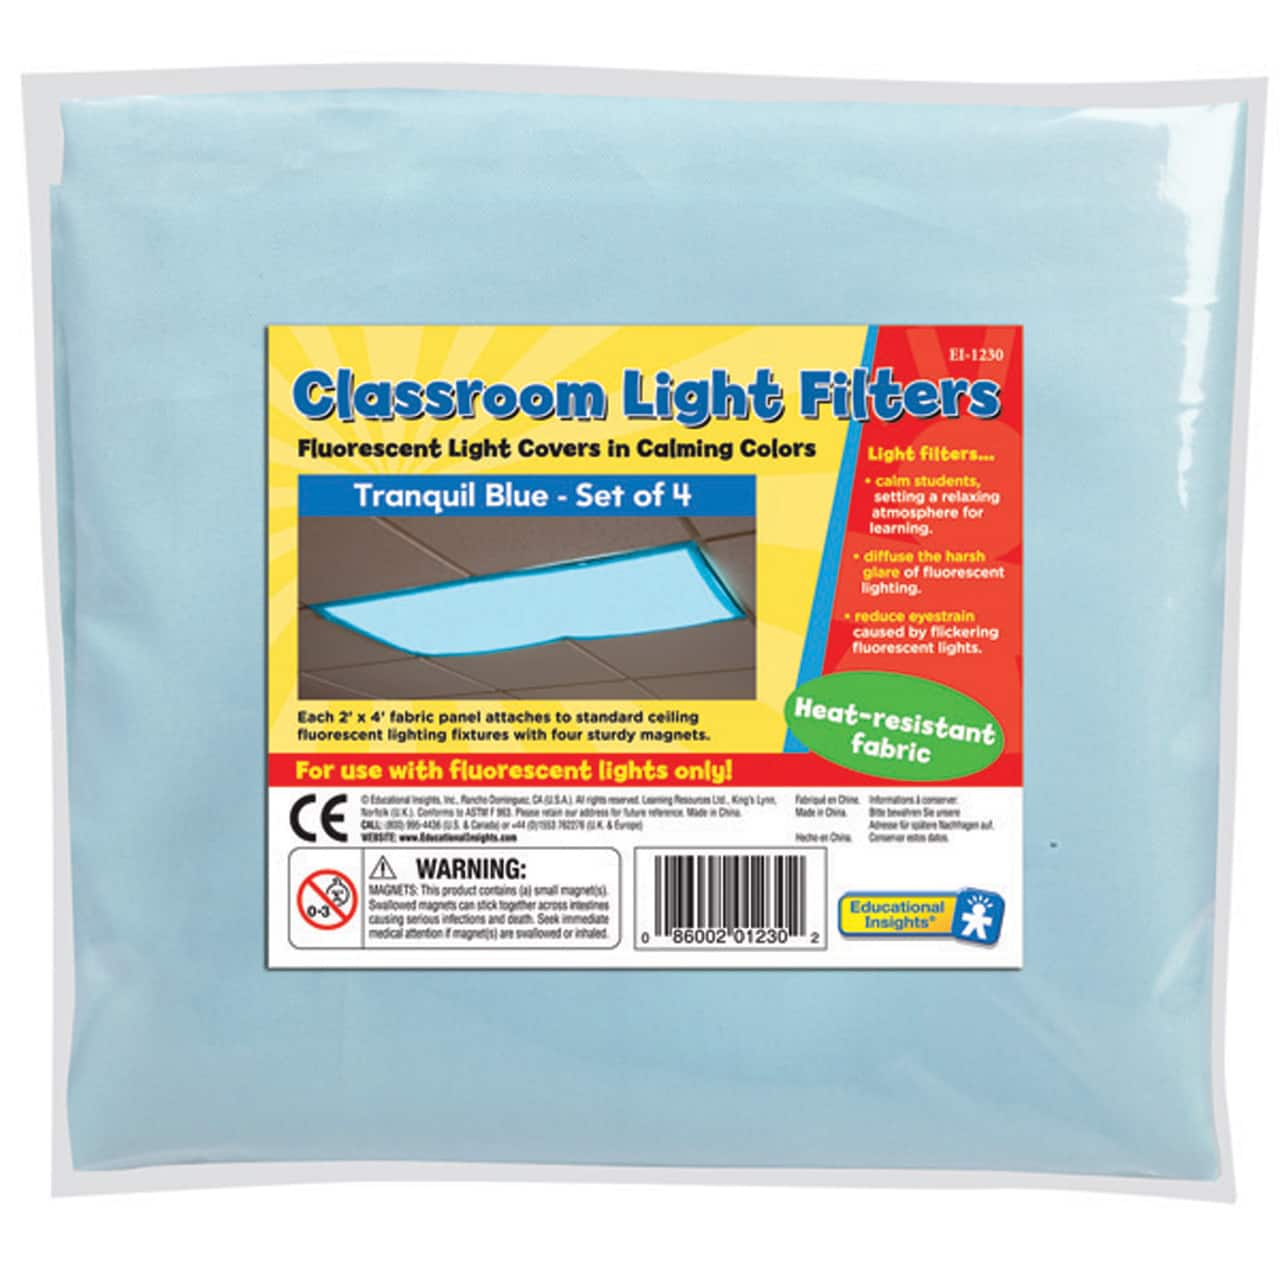 Classroom Light Filters, Tranquil Blue